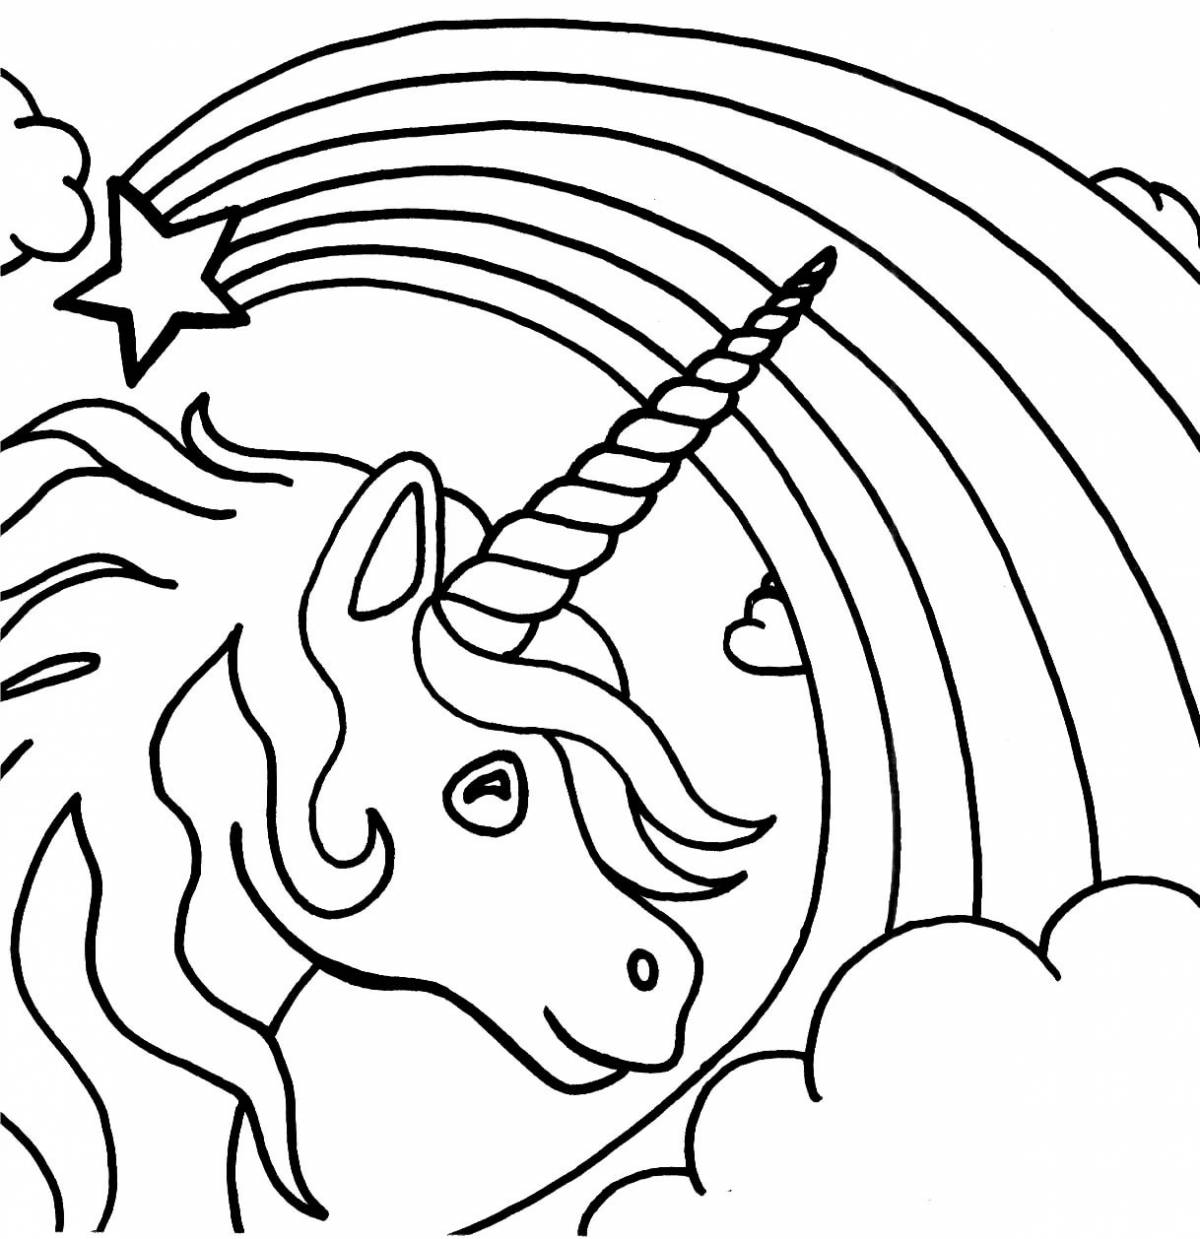 Happy coloring book magical unicorns